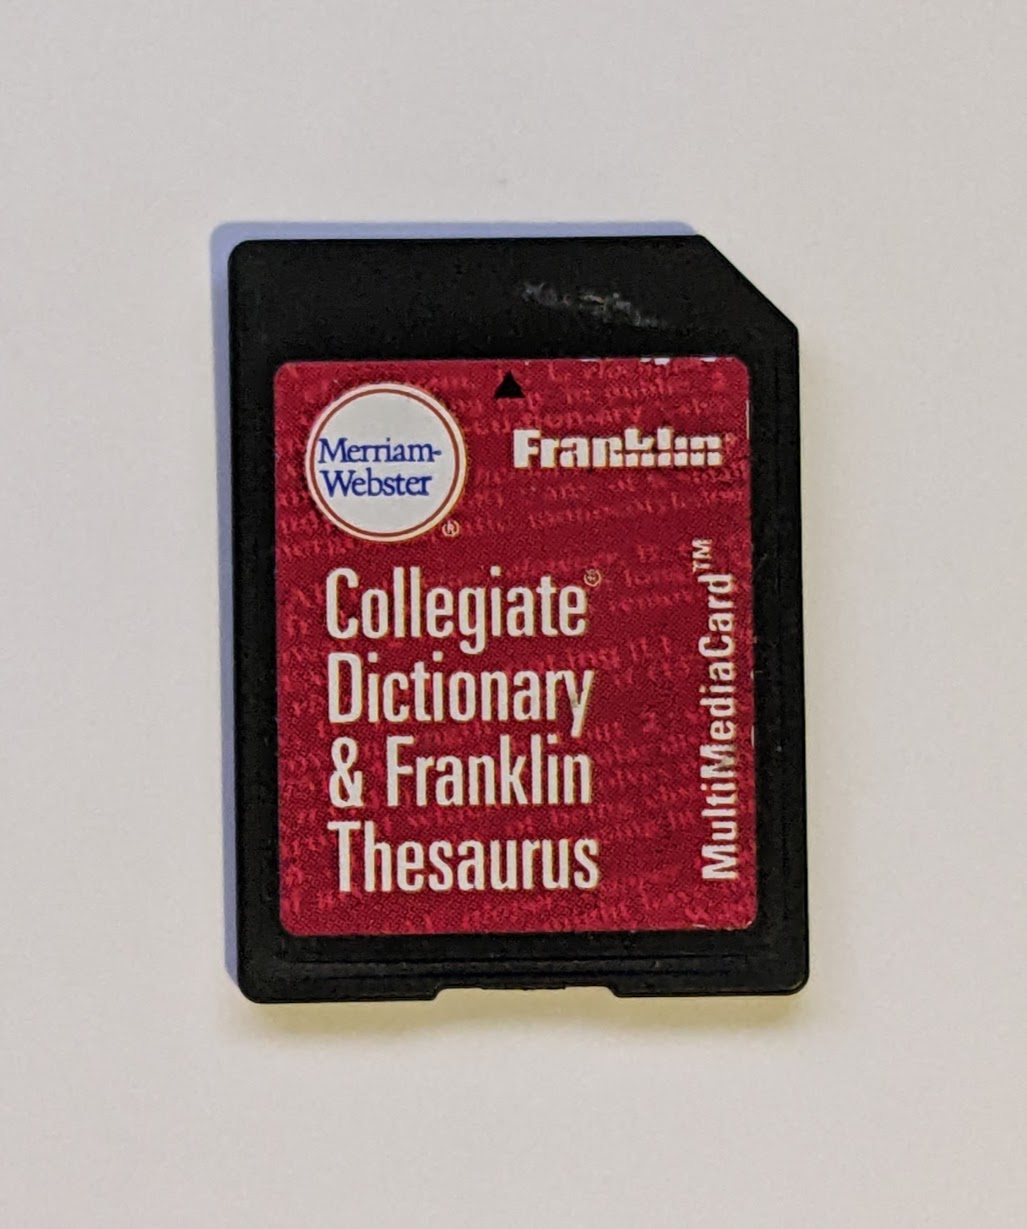 Collegiate Dictionary & Franklin Thesaurus (MMC Image)